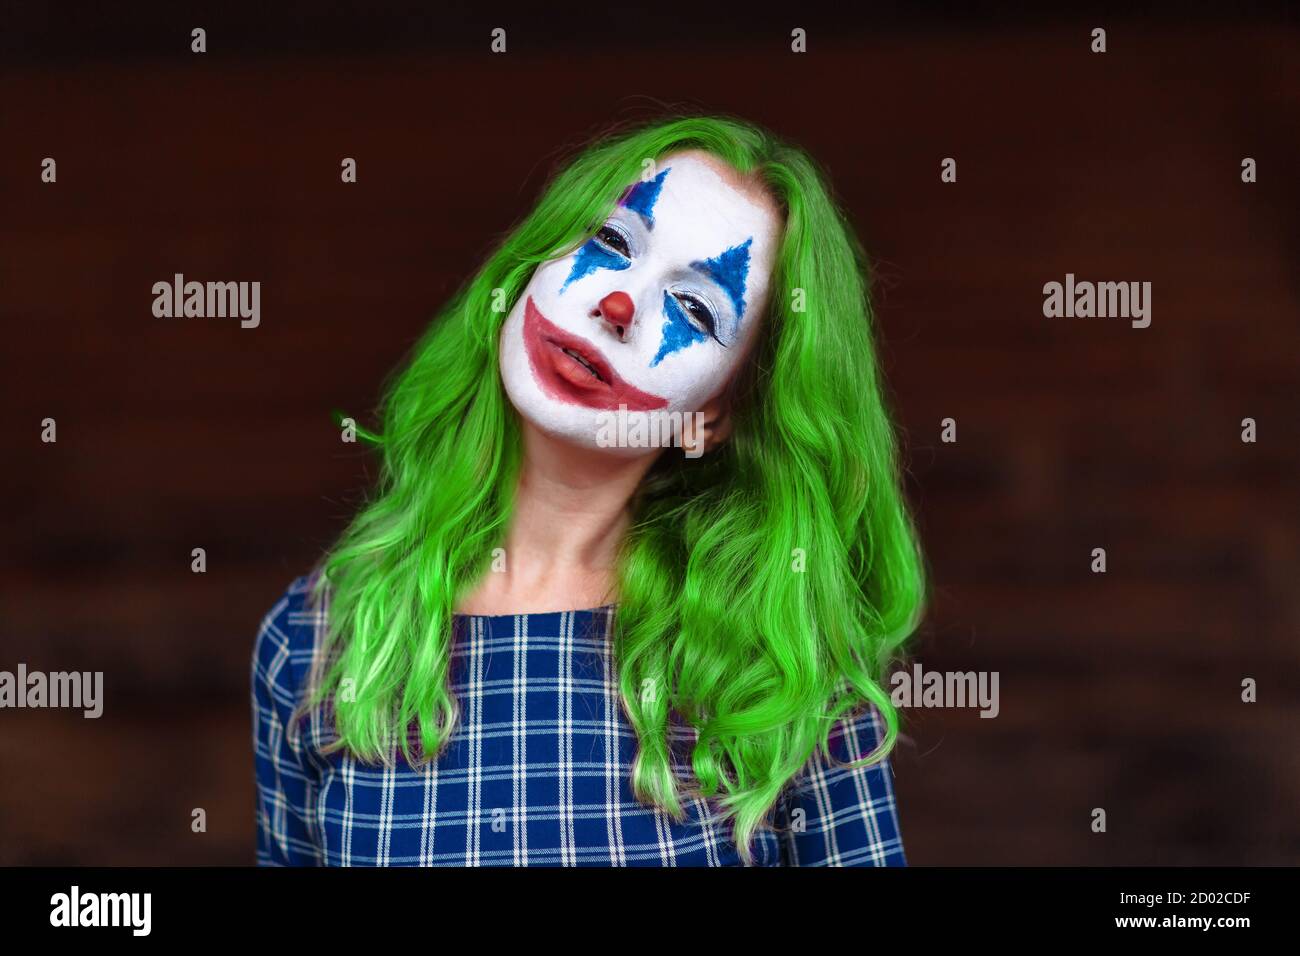 Incredible Compilation of 999+ Girl Joker Images in Stunning 4K Resolution